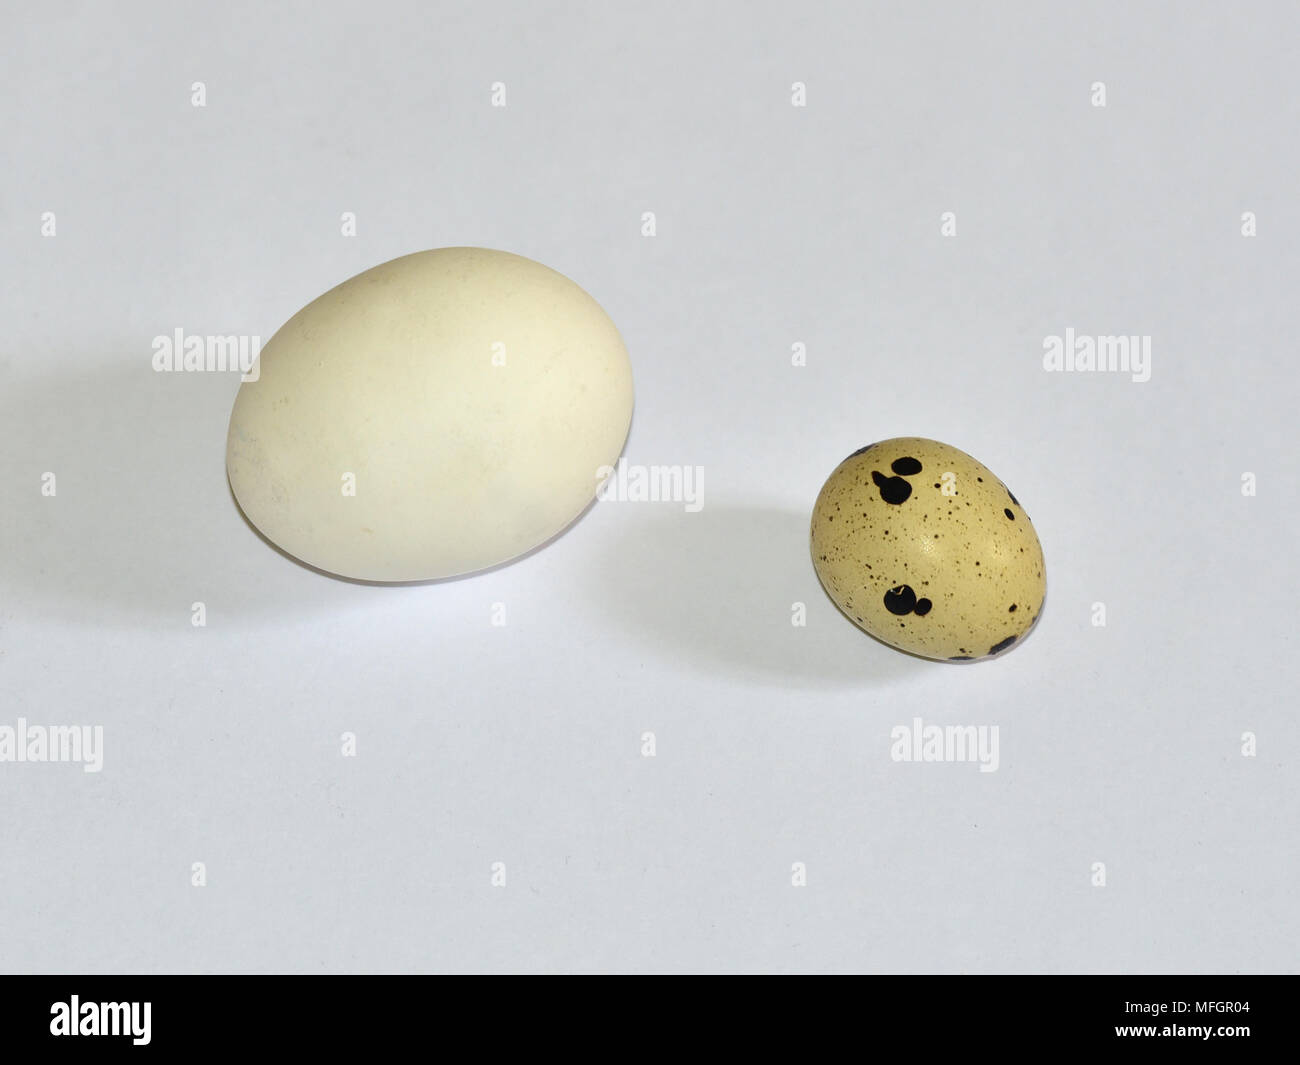 Chicken egg and quail egg on white background. Stock Photo